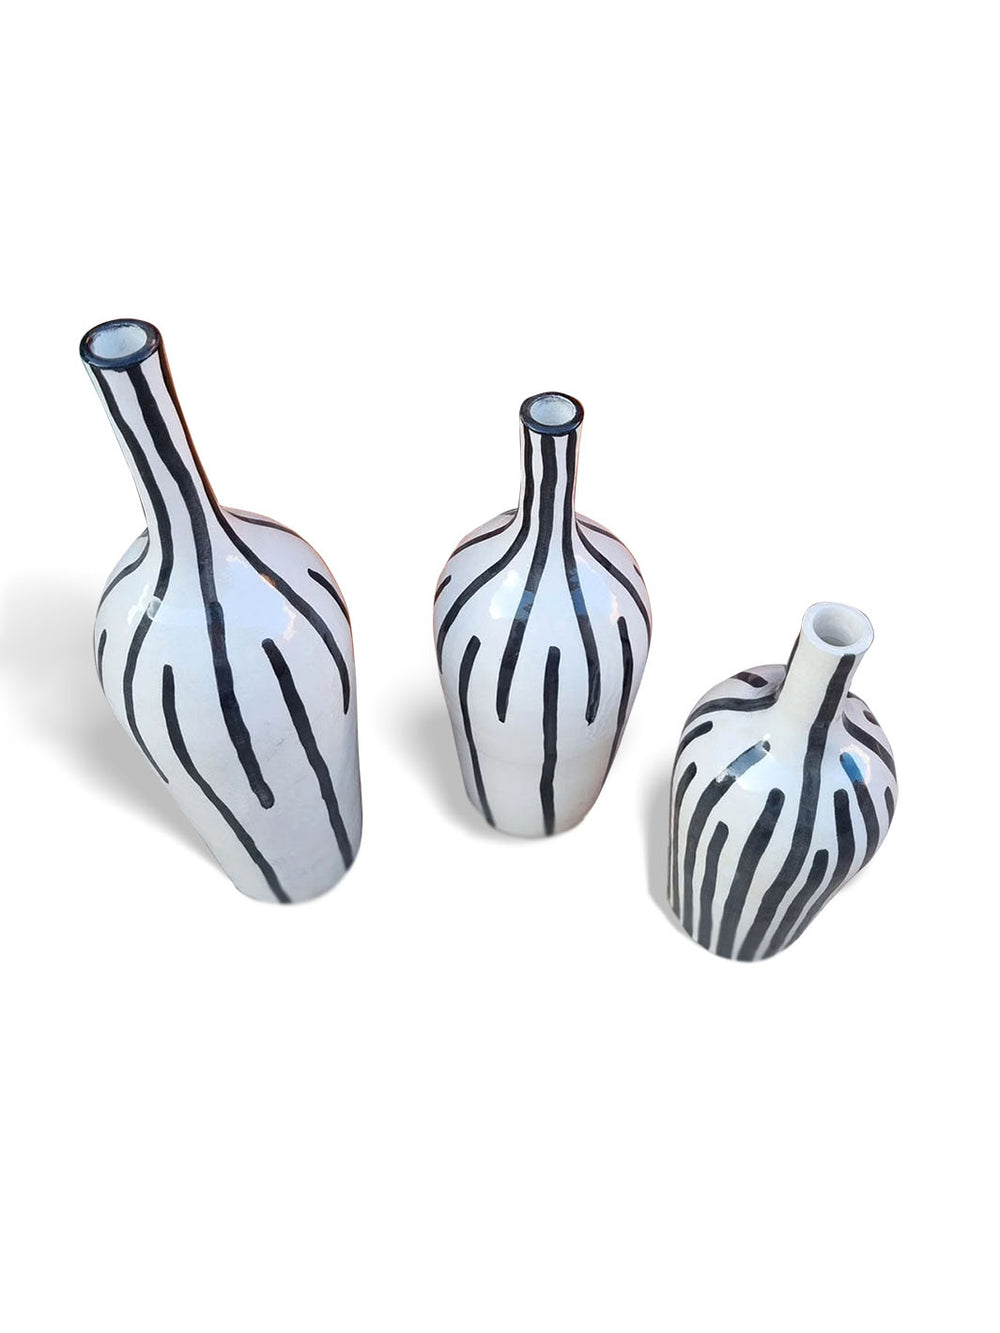 Handcrafted Authentic Ceramic Enamelled Vase Libitii Vases LIB-0179-1